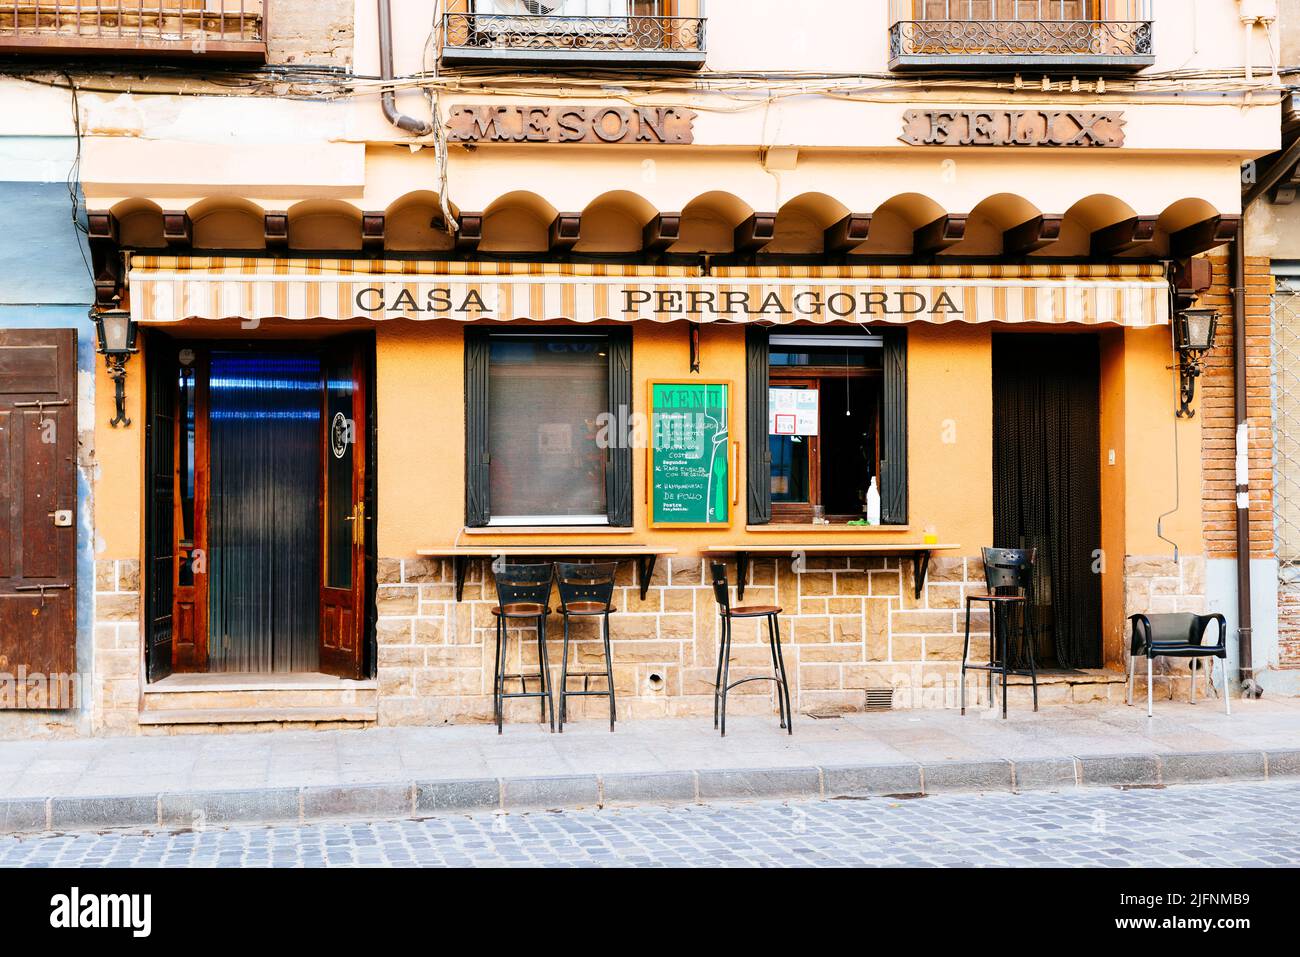 The popular Casa Perragorda. Daroca, Zaragoza, Aragón, Spain, Europe Stock Photo